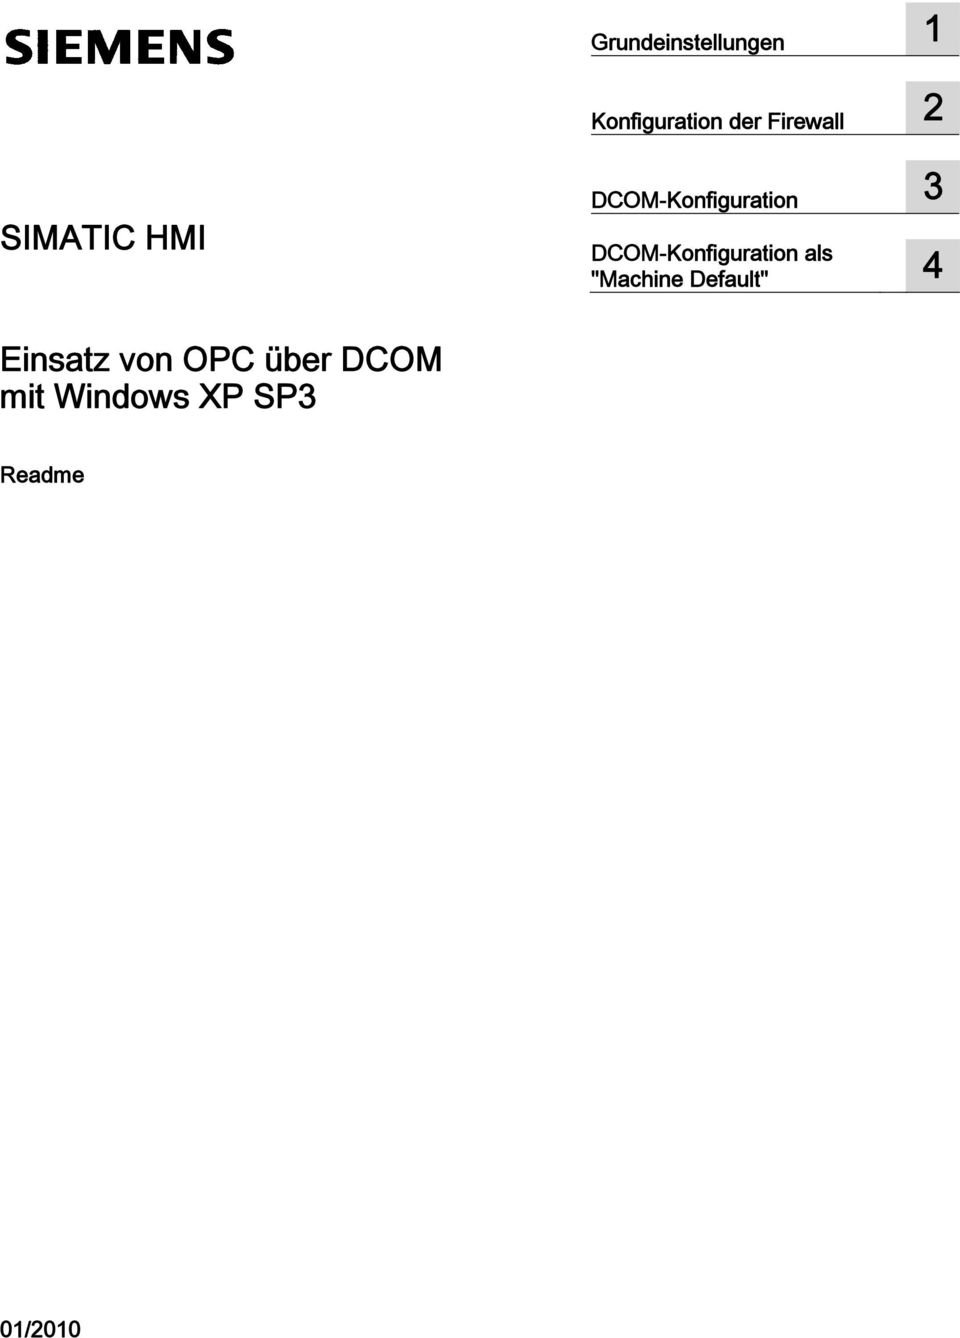 DCOM-Konfiguration als "Machine Default" 4